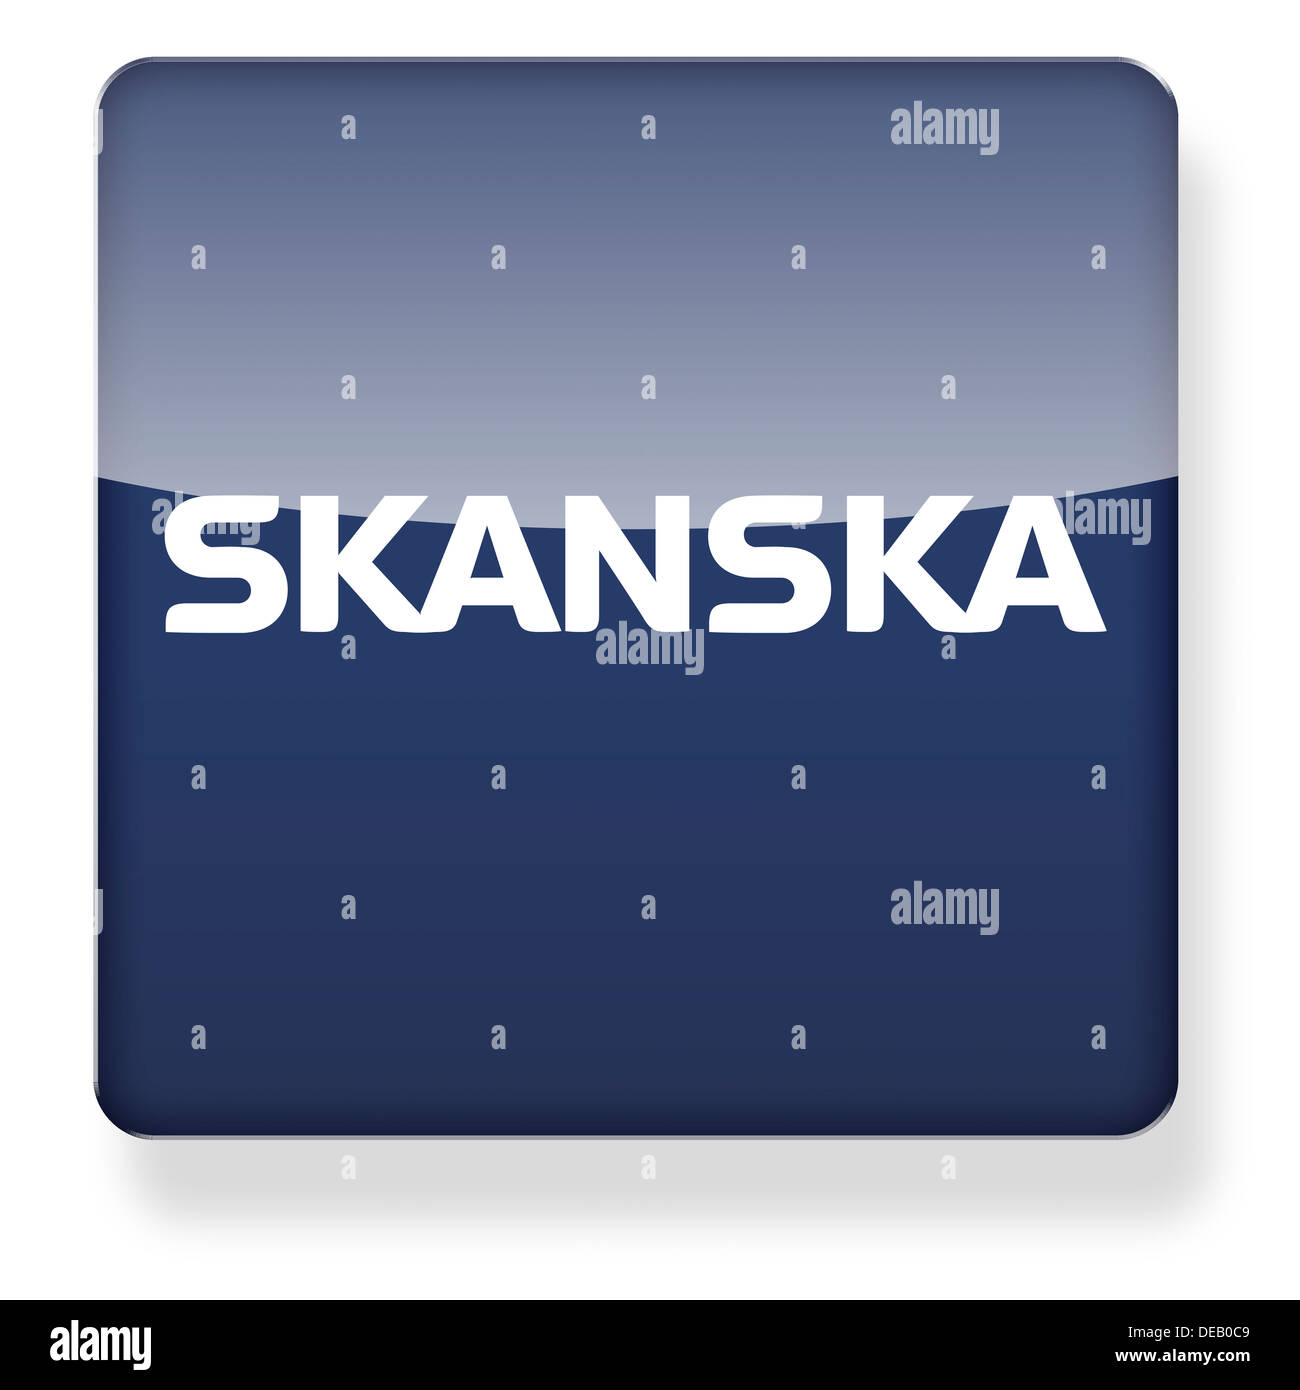 Skanska logo as an app icon. Clipping path included. Stock Photo